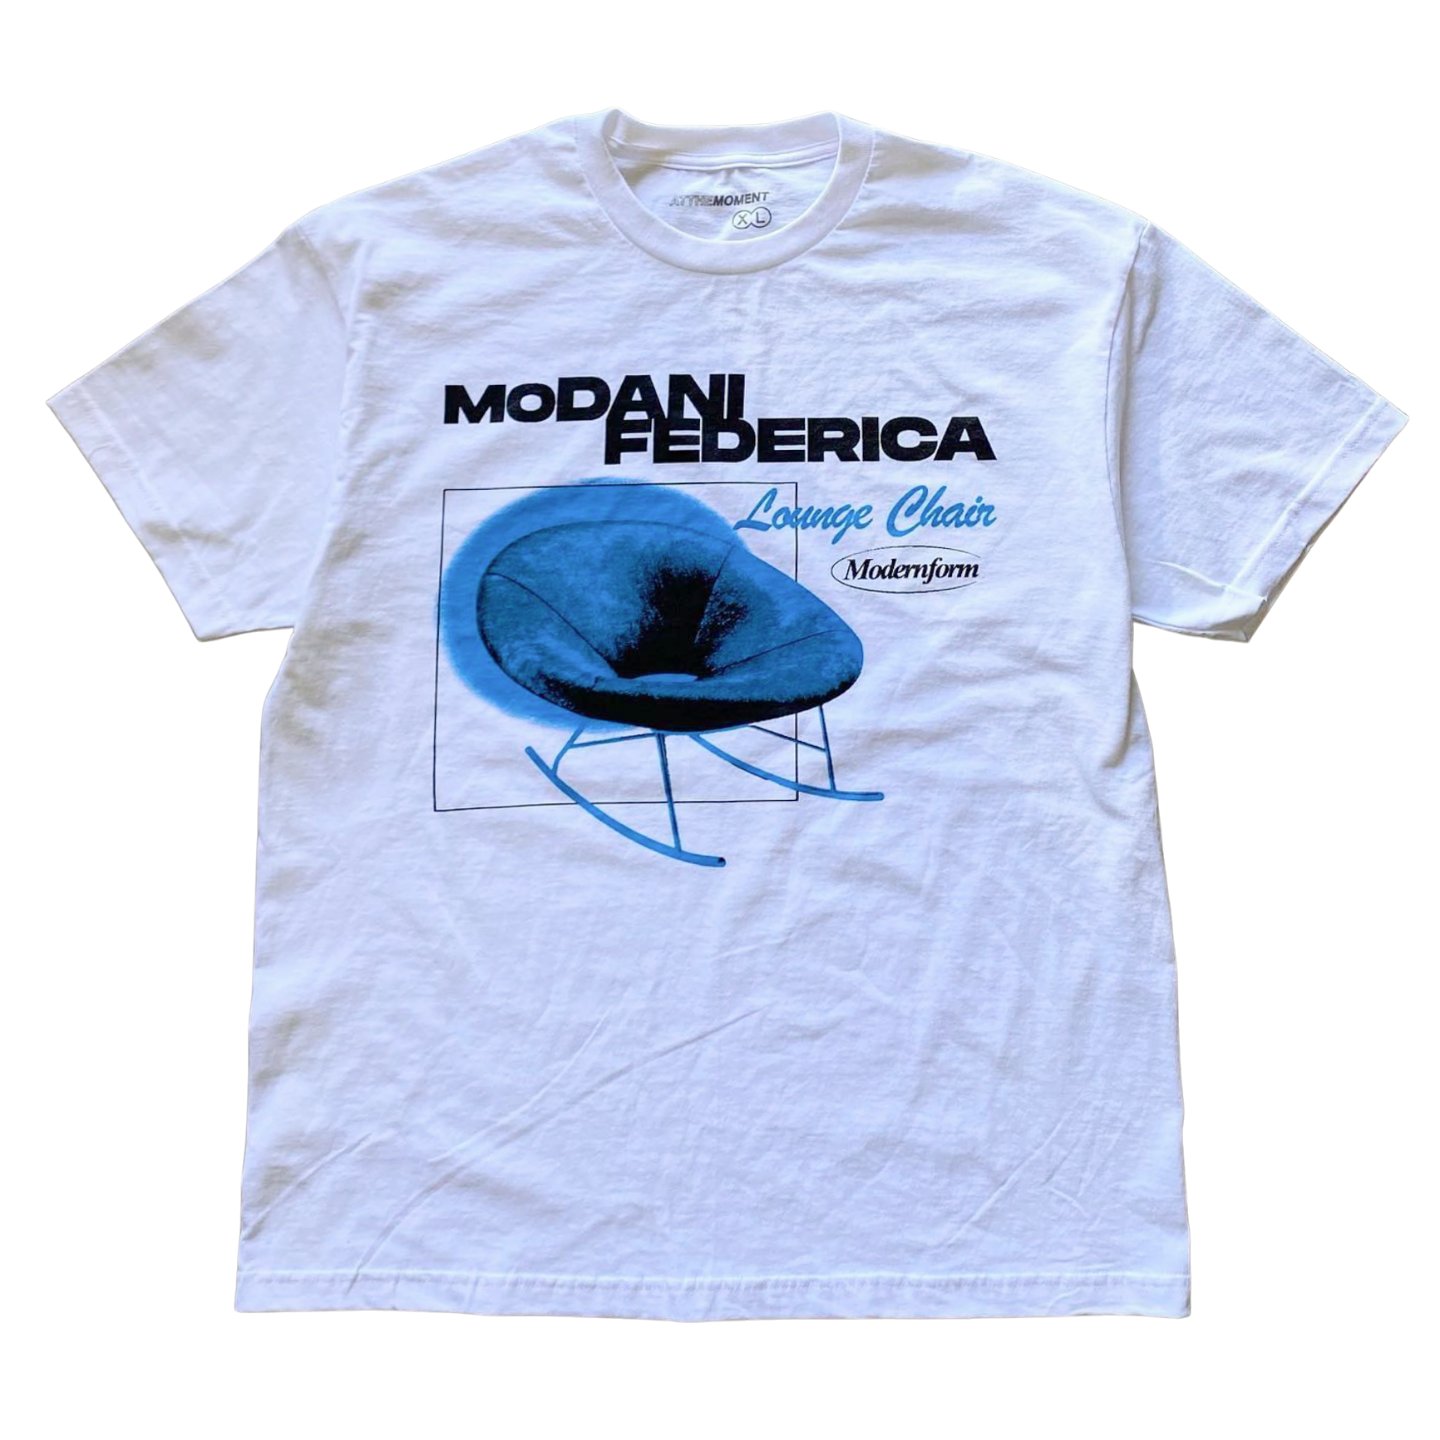 T-shirt Federica Modani